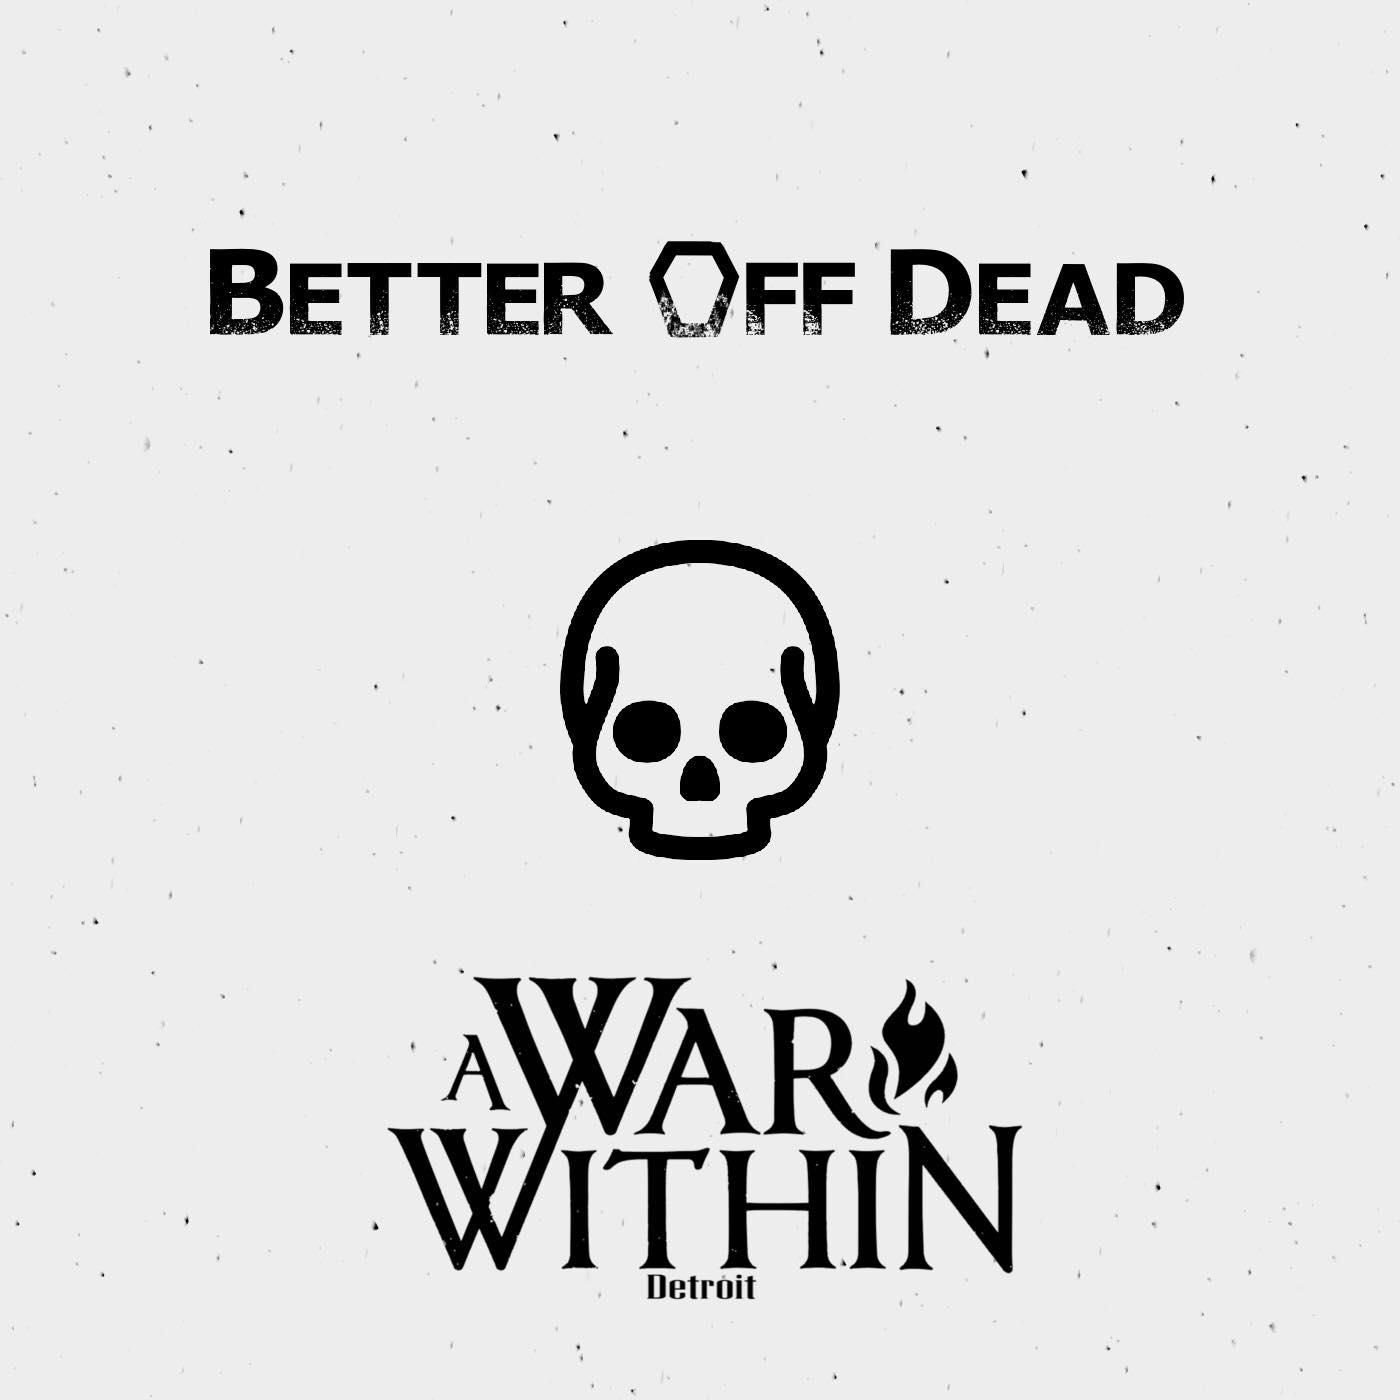 Better off Dead. Better off Yeat. Аватарка better off Dead. I'M better off Dead. Well within